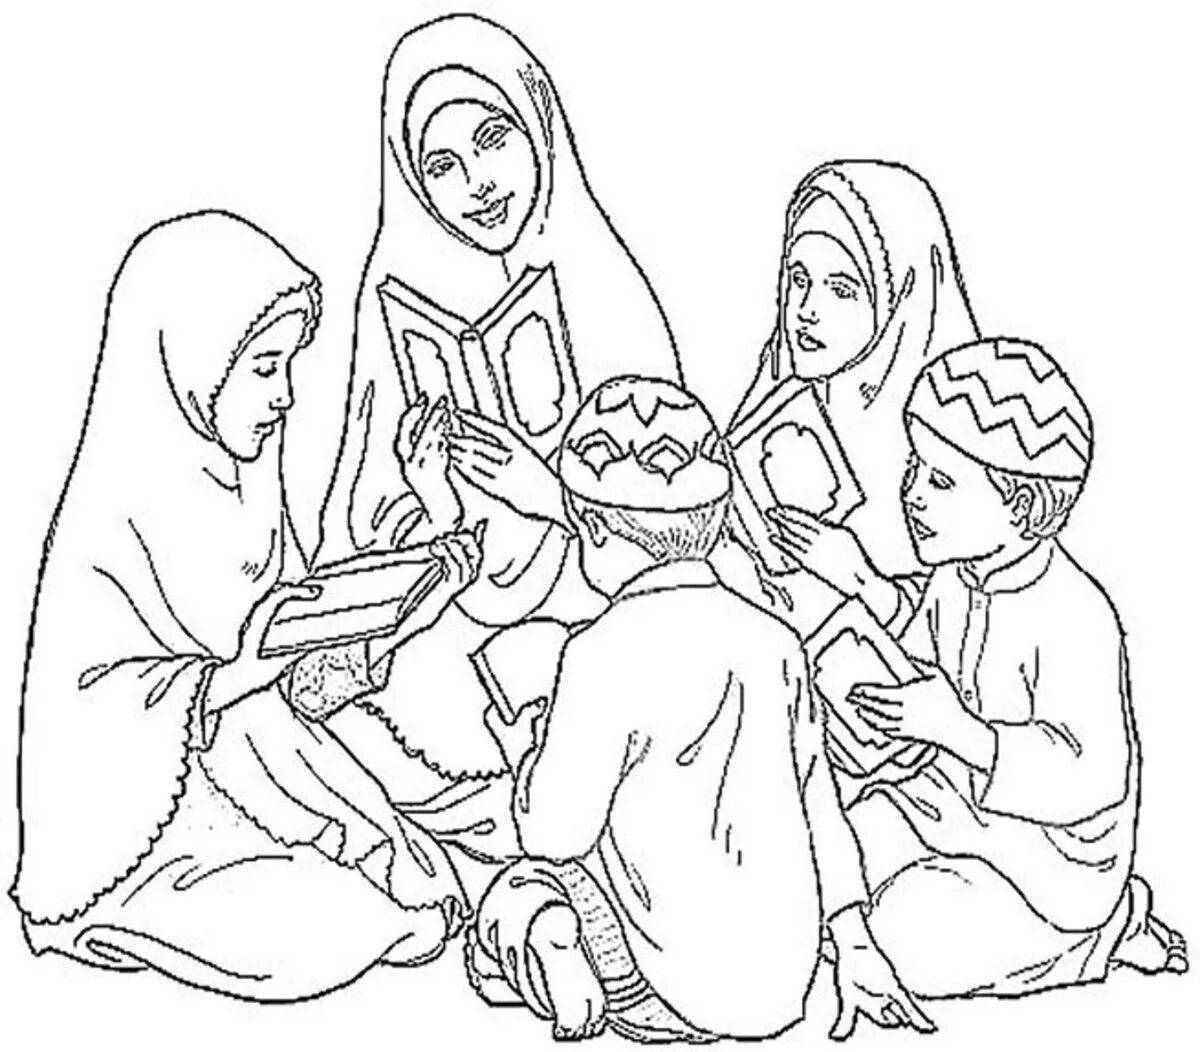 Coloring book funny muslim family